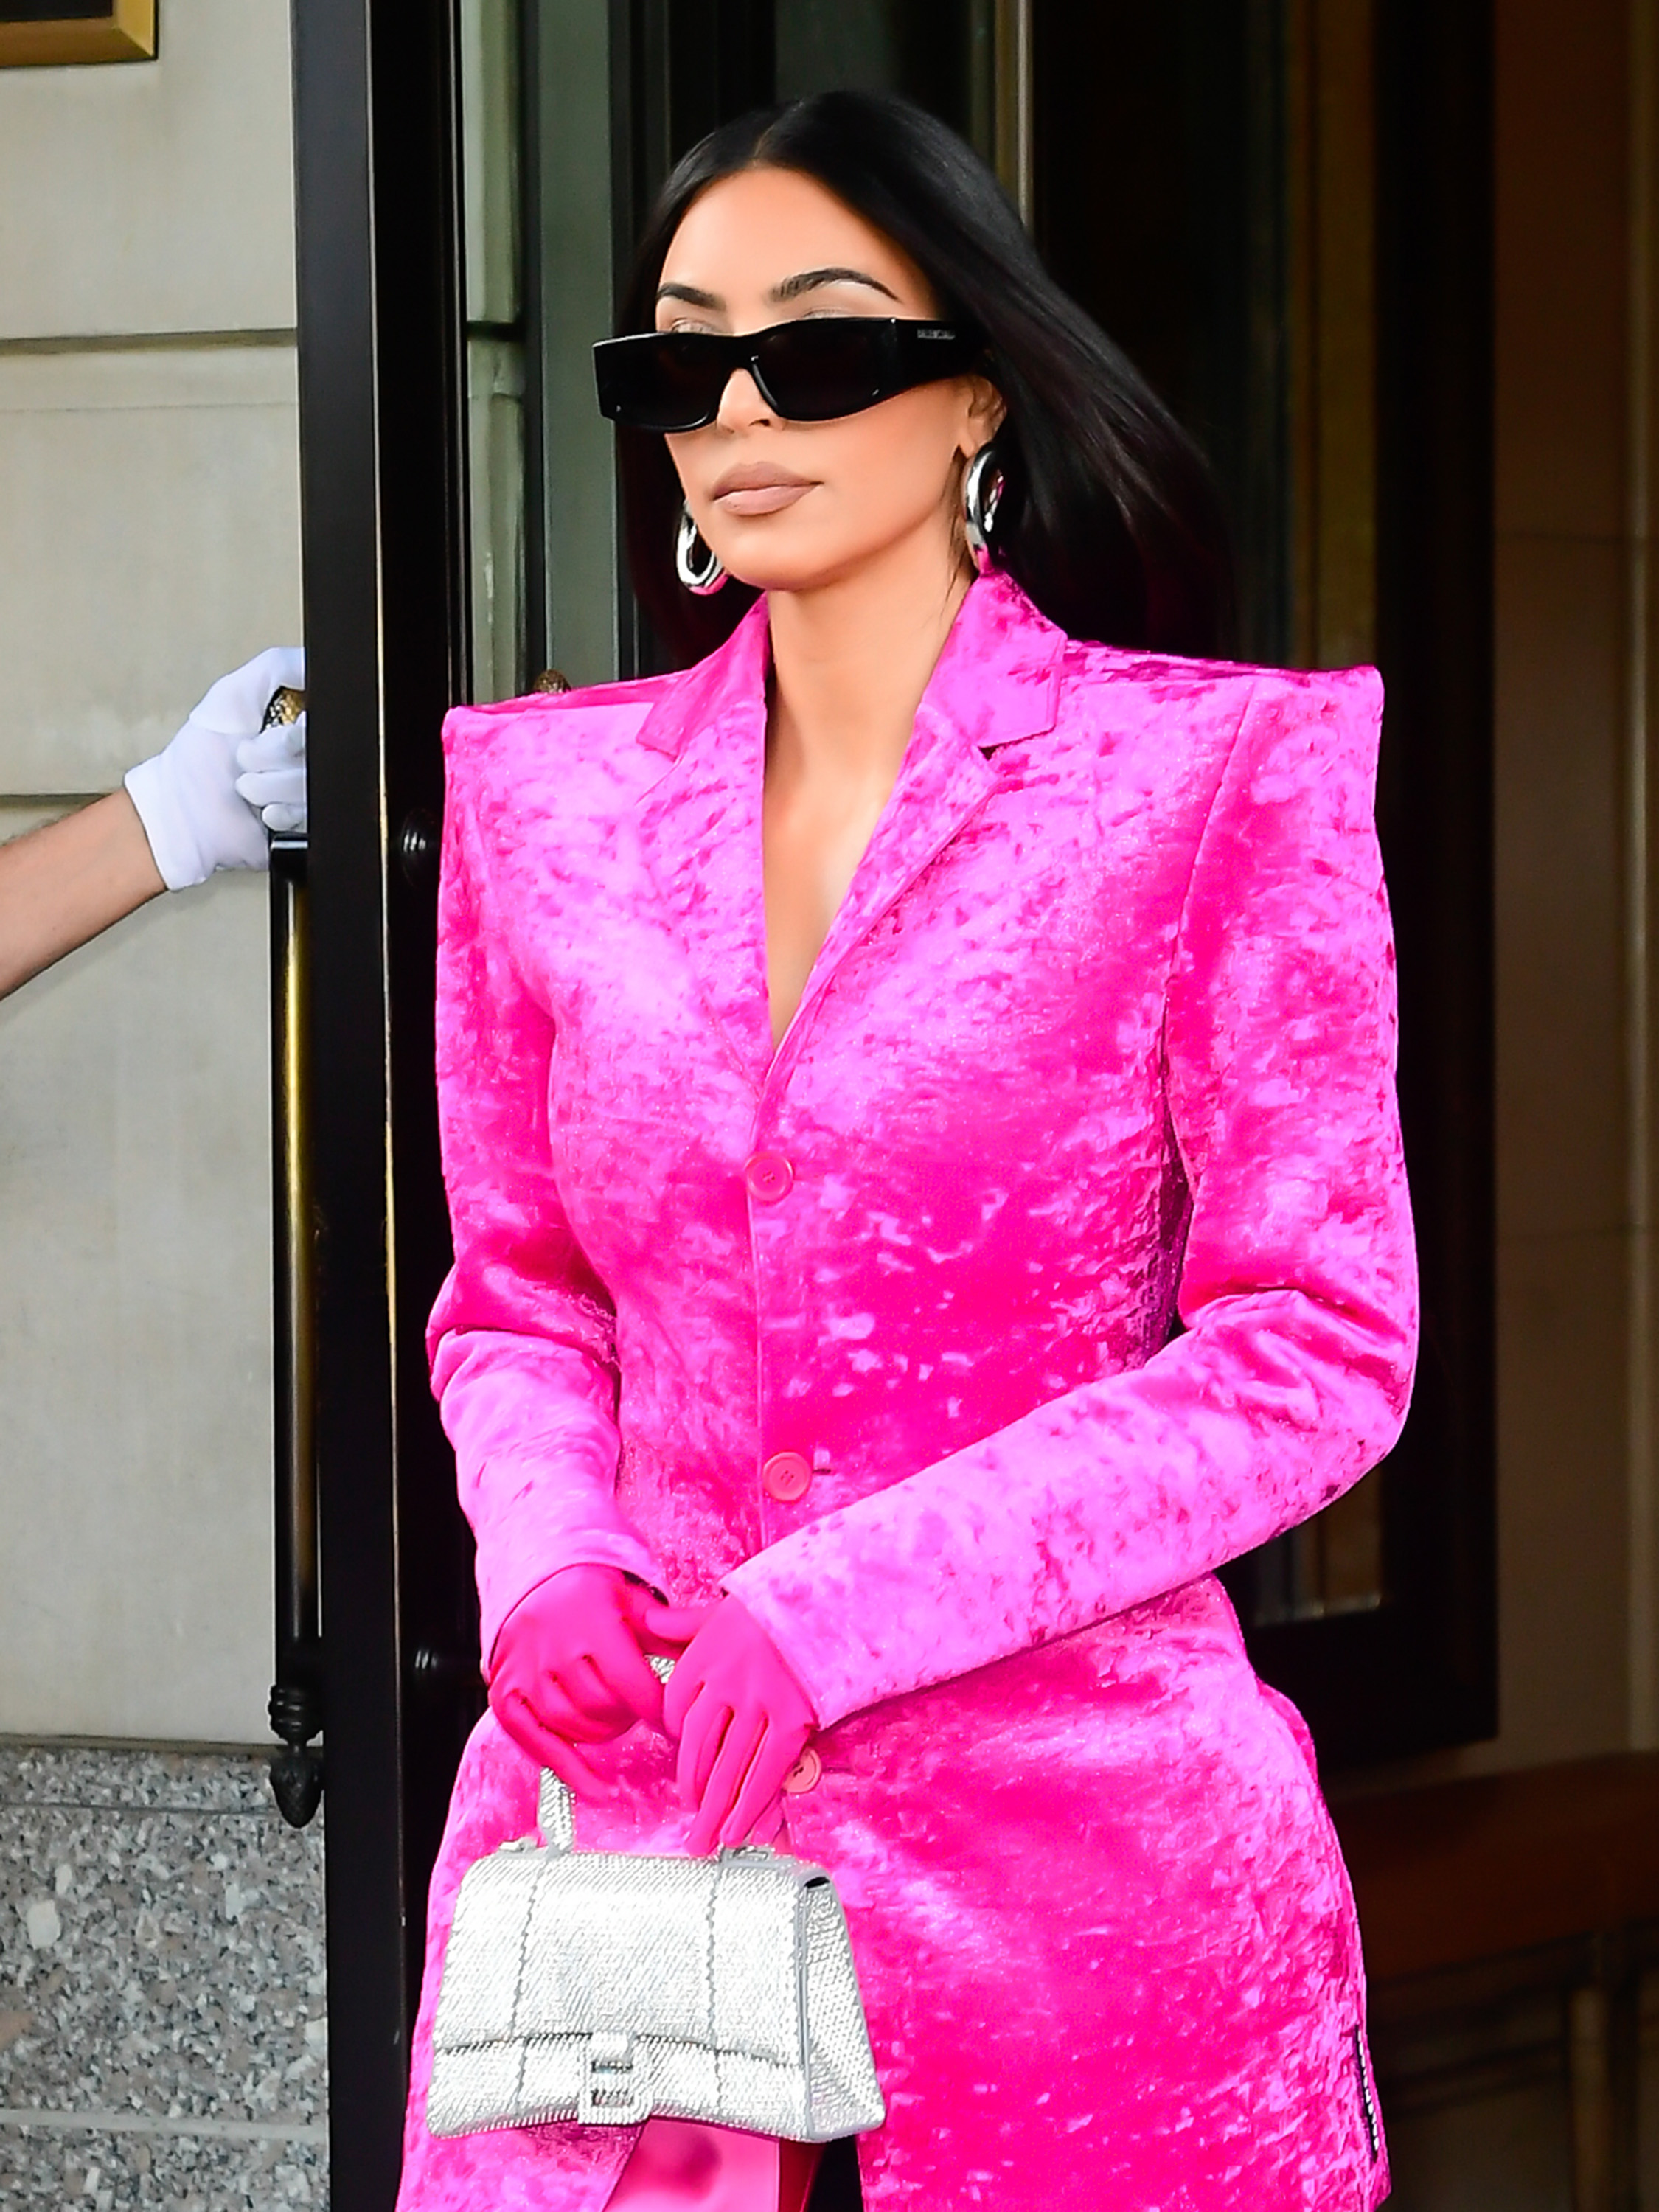 Kim Kardashian's Pink Suit Fulfills All Our High Fashion Barbie Dreams